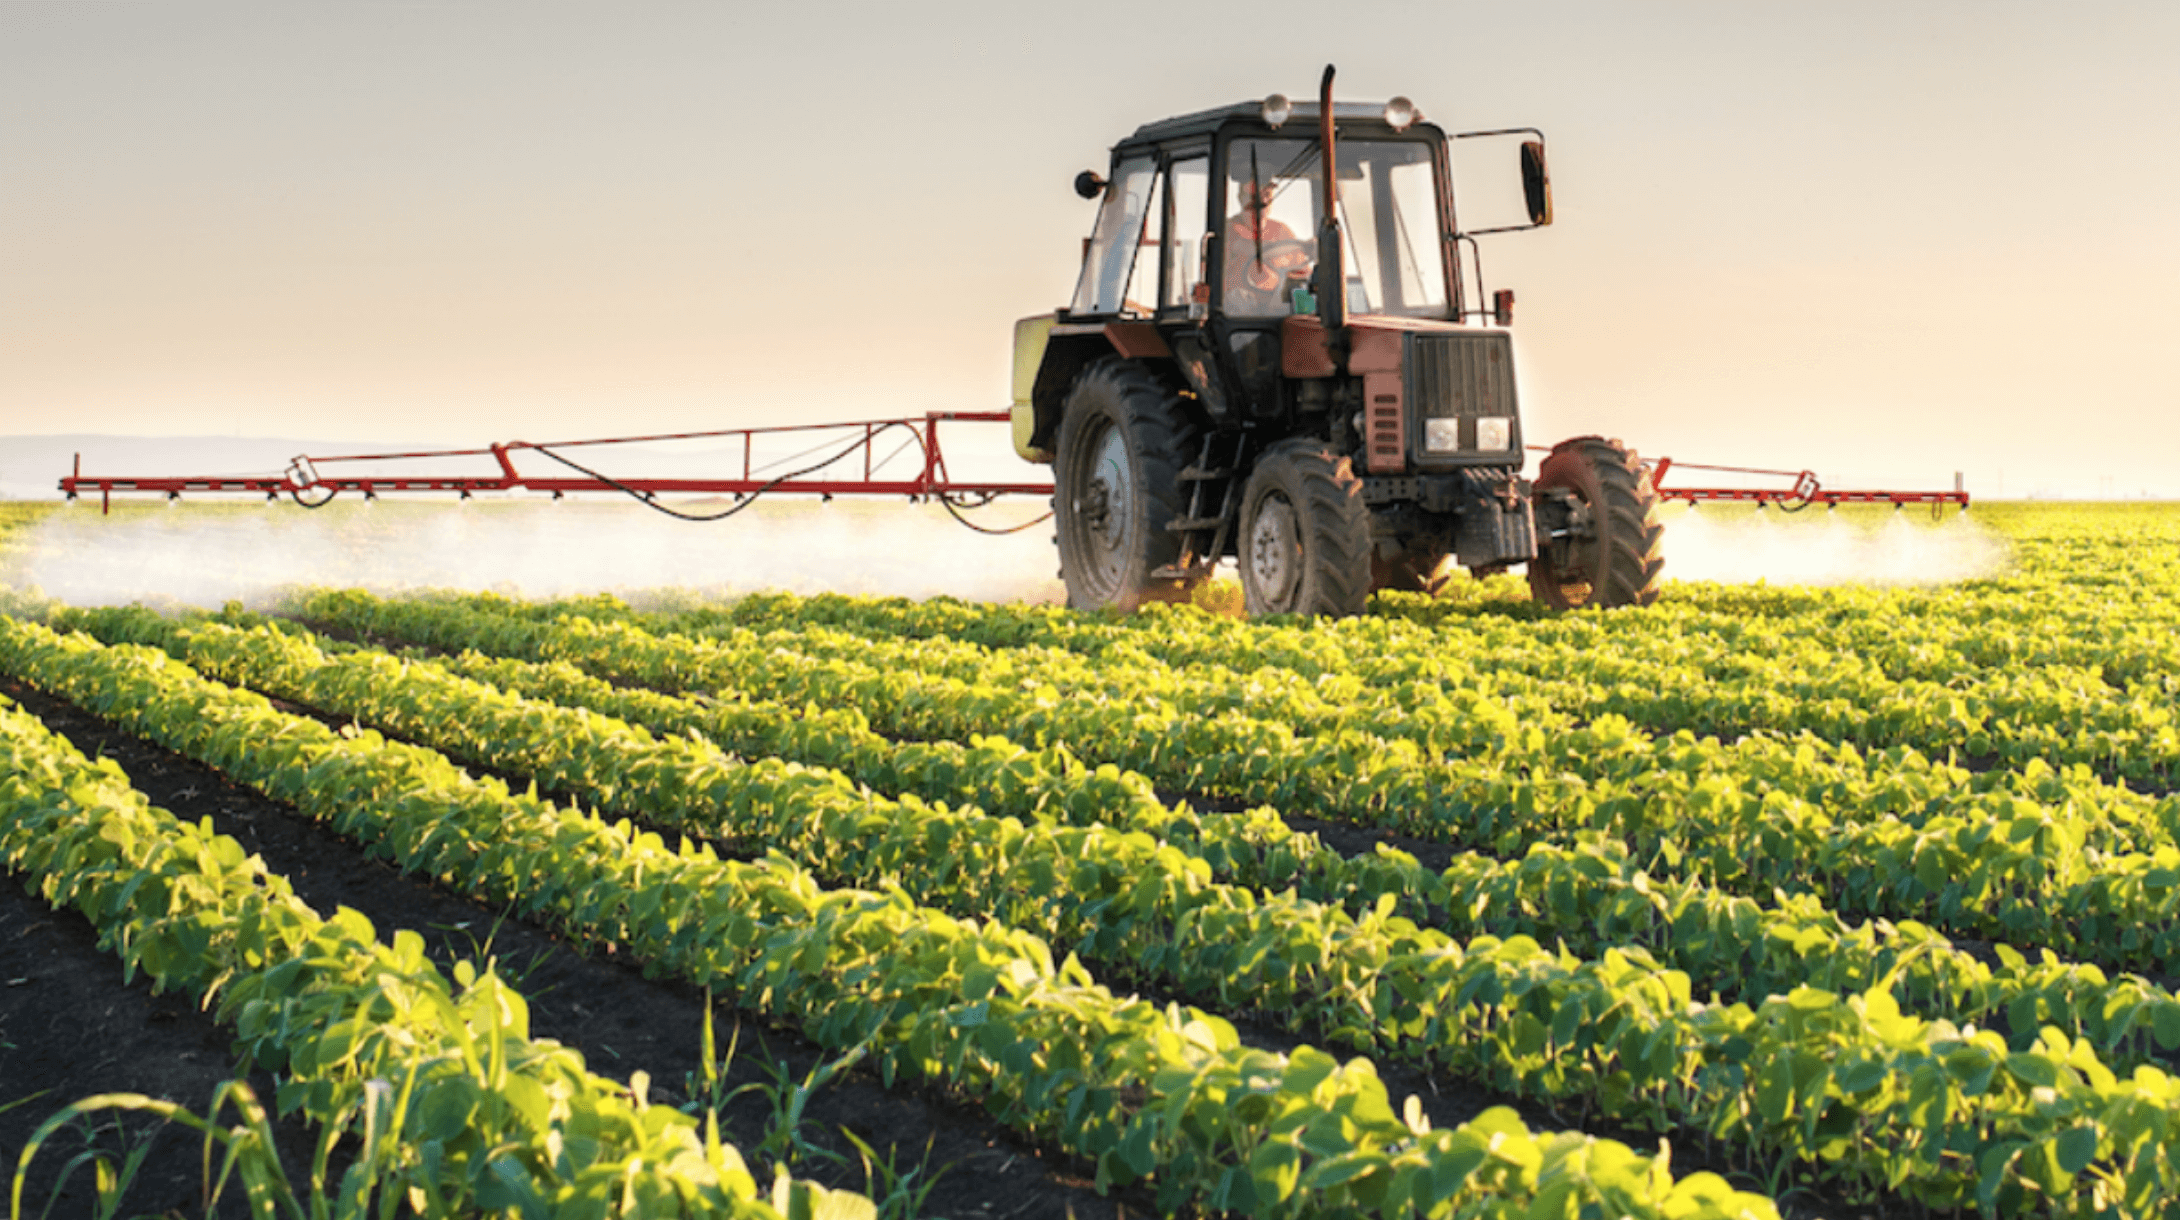 Monsanto, Roundup, weedkiller, glyphosate, cancer-causing pesticides